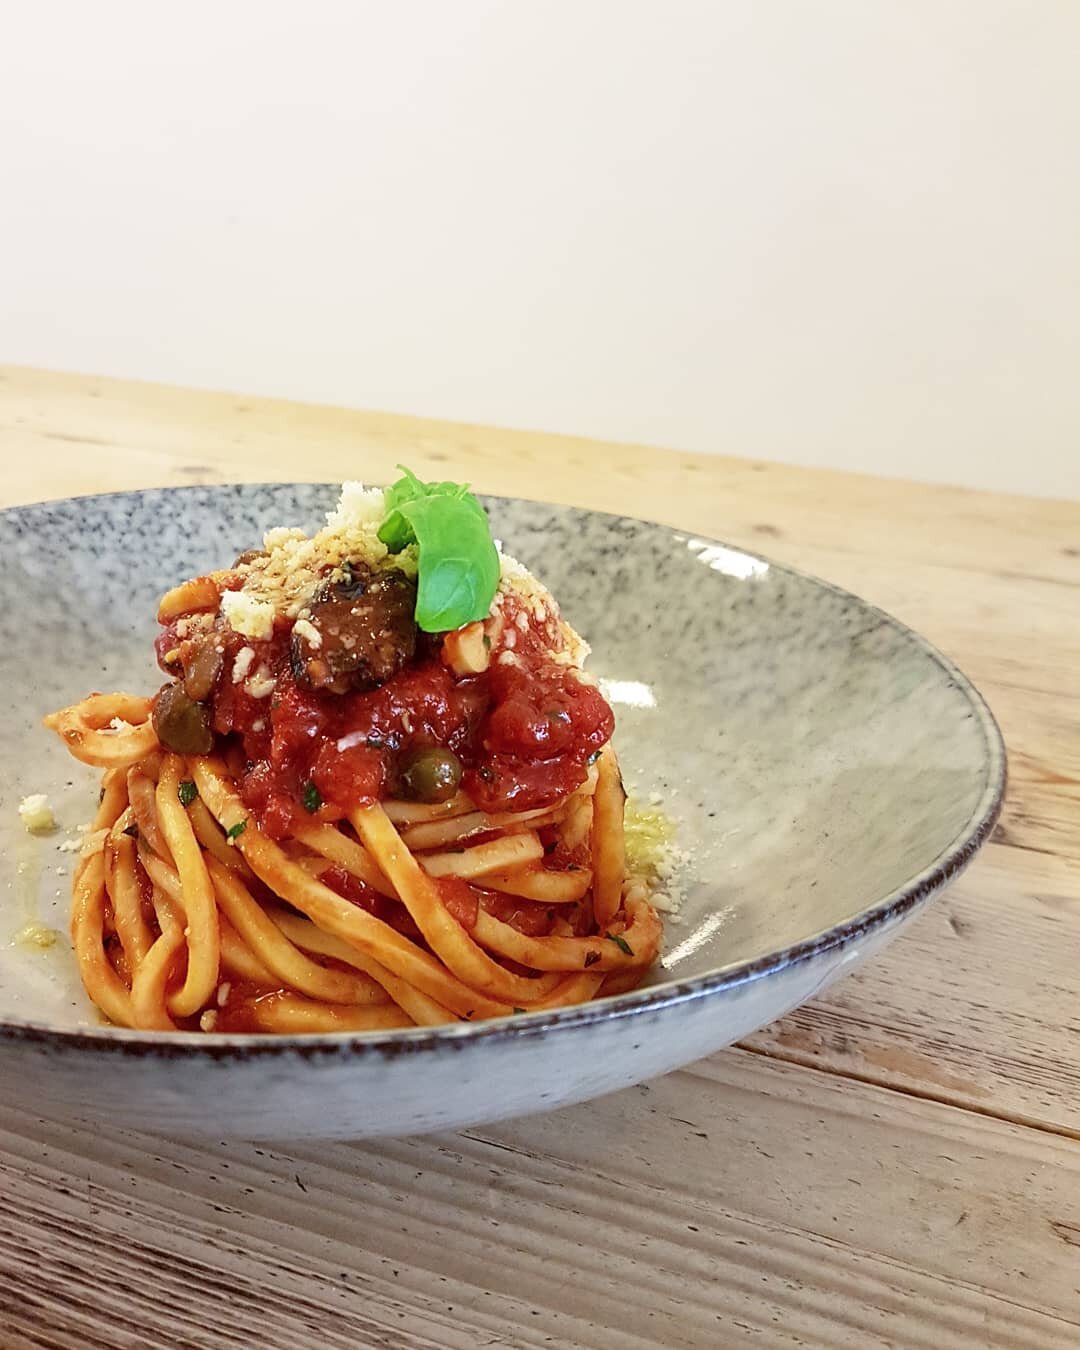 Restaurant review: Pasta & Cuore, Mt Eden - NZ Herald